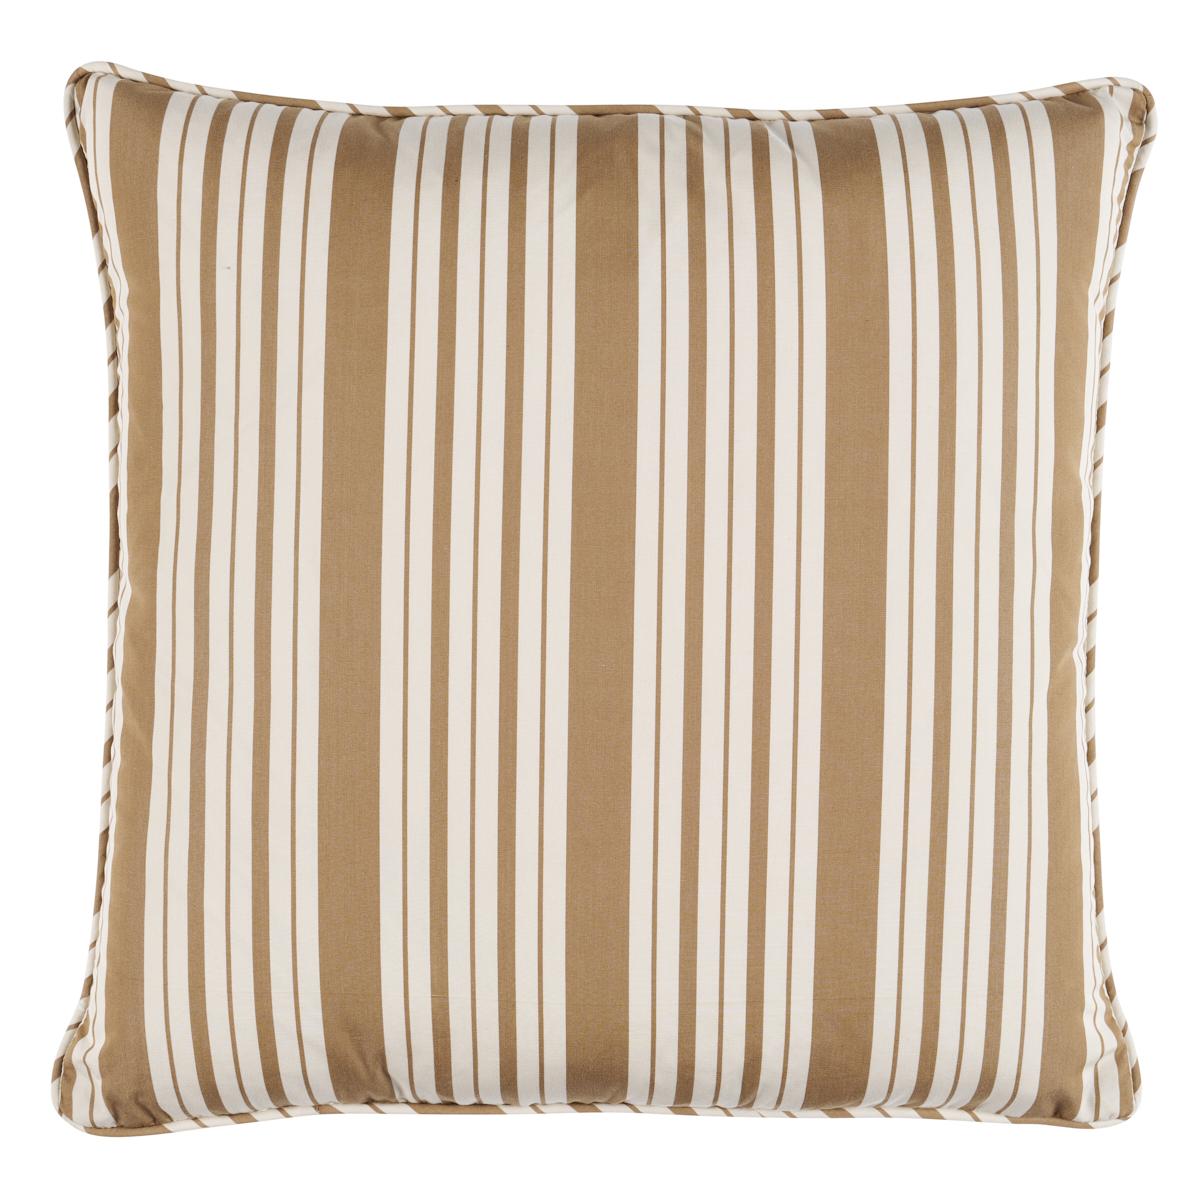 Markie Stripe Pillow in Neutral 20 x 20"